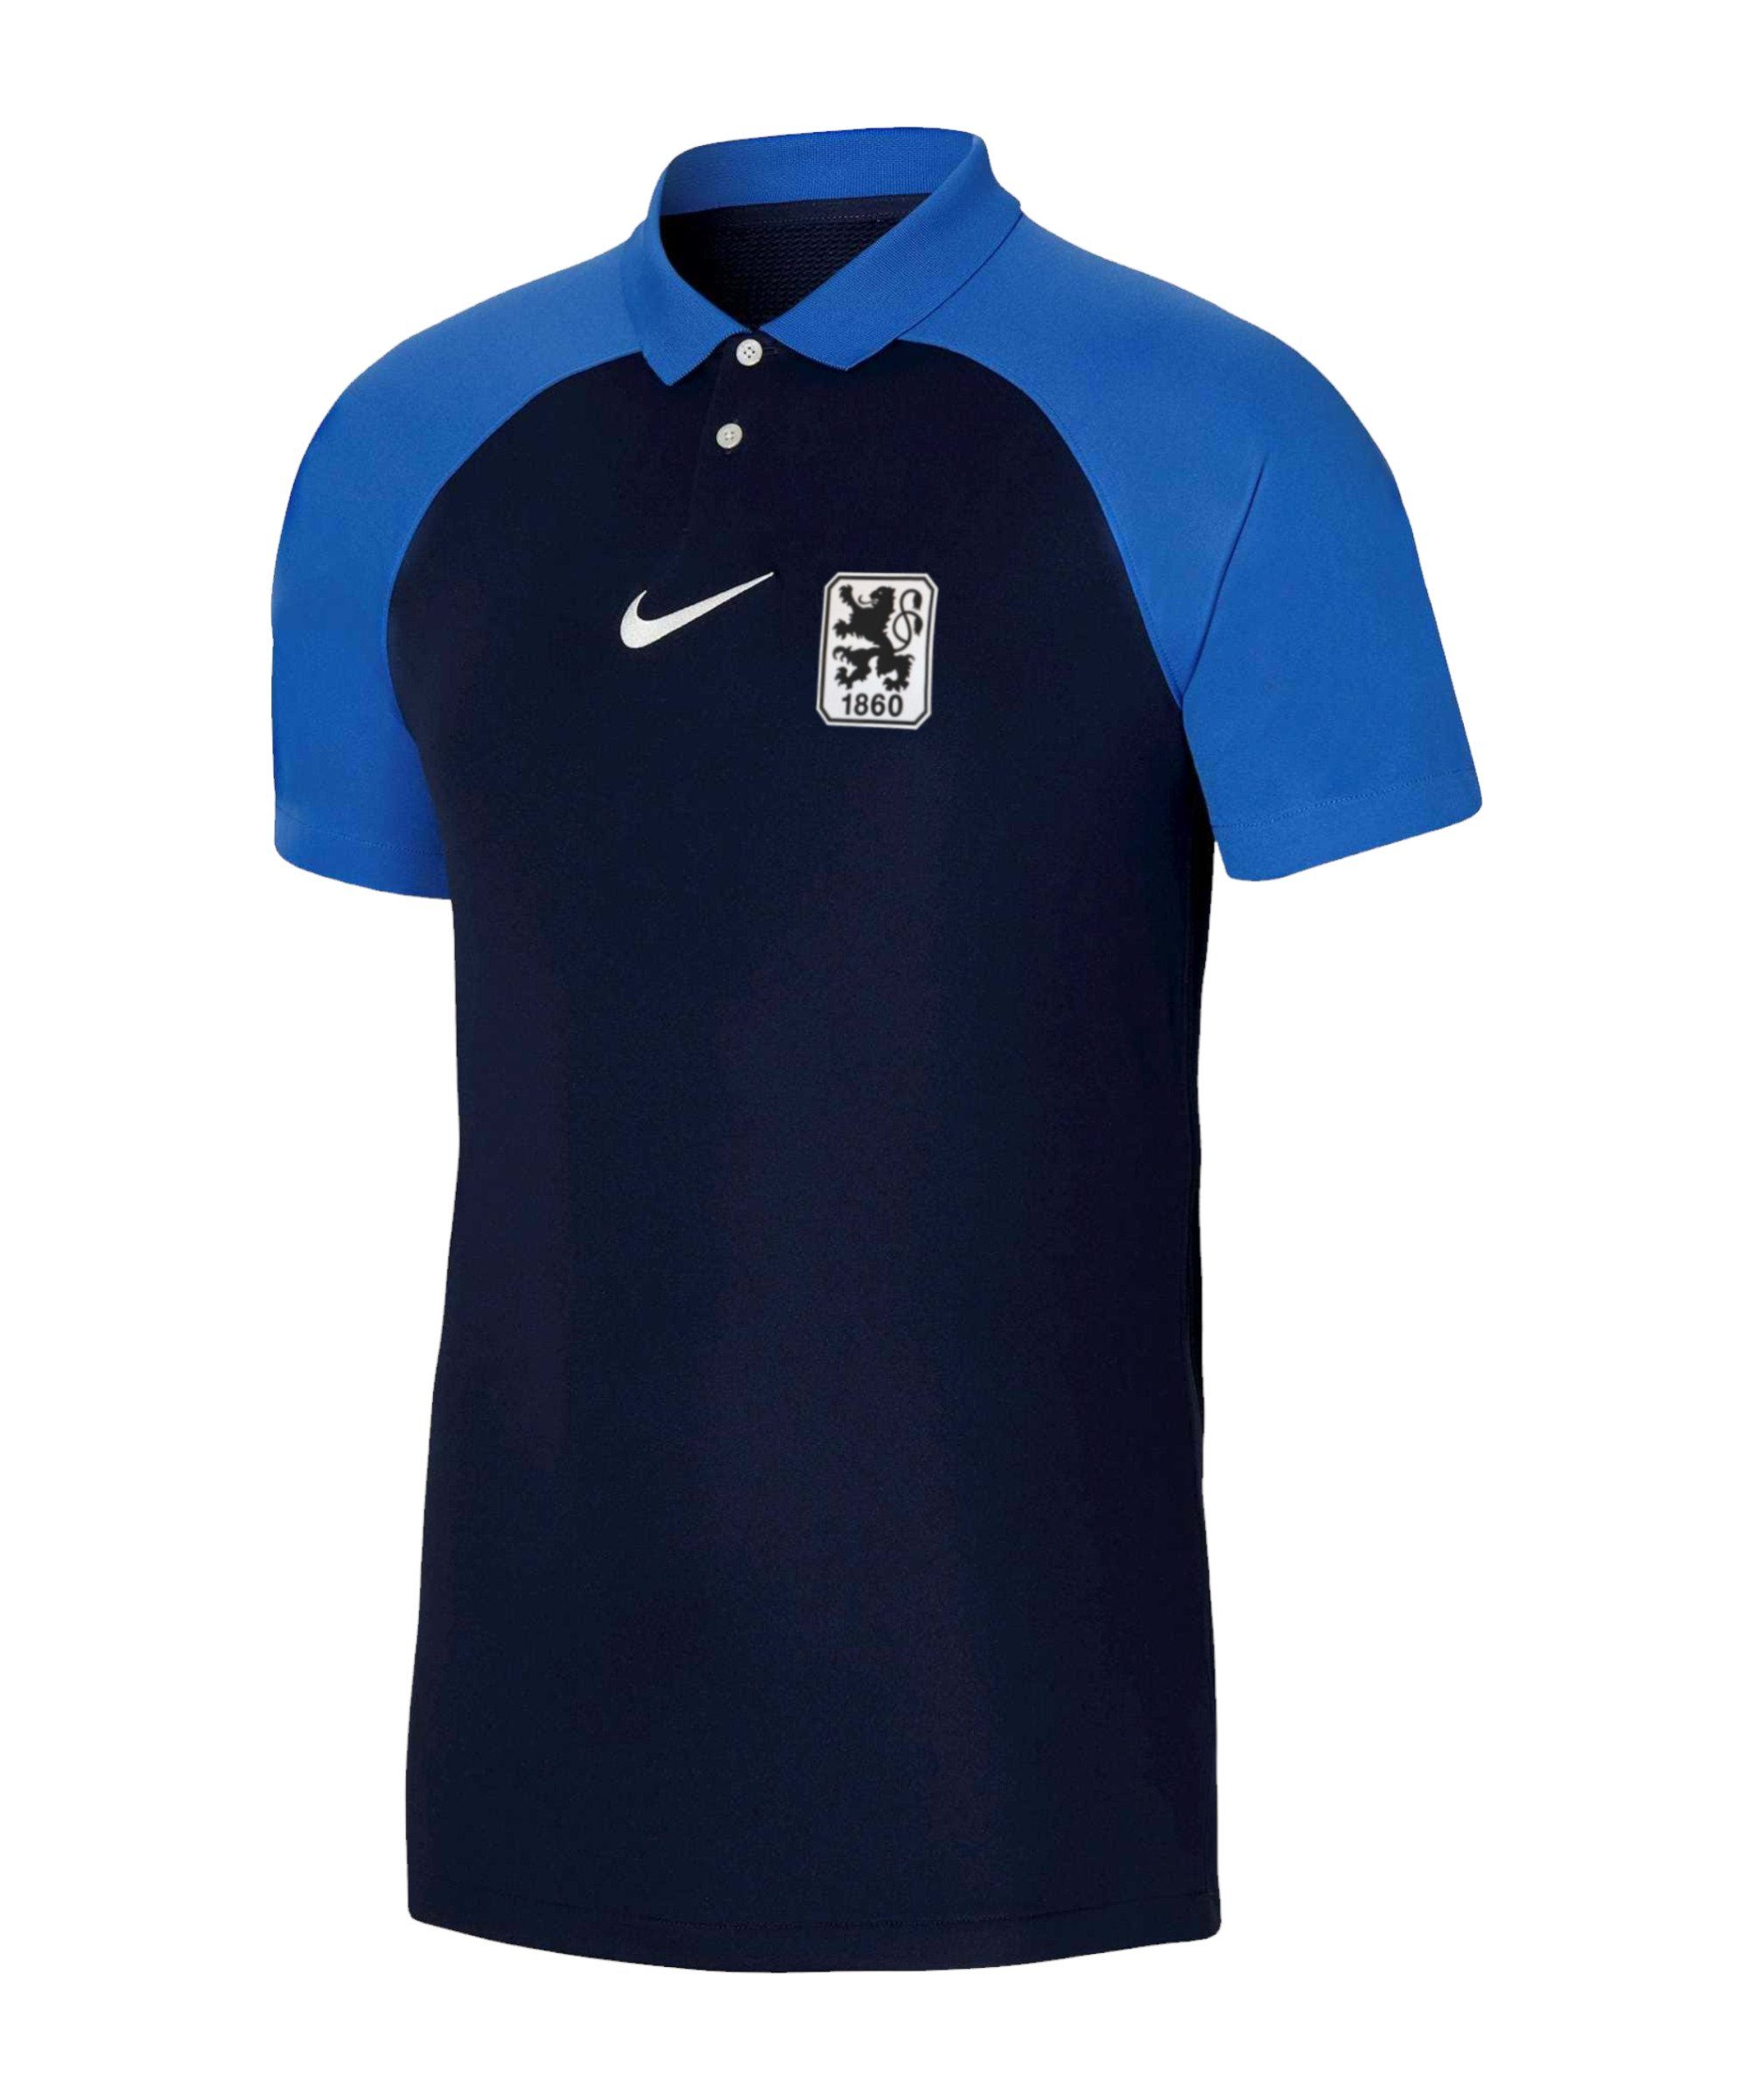 TSV München T-Shirt Poloshirt Nike default 1860